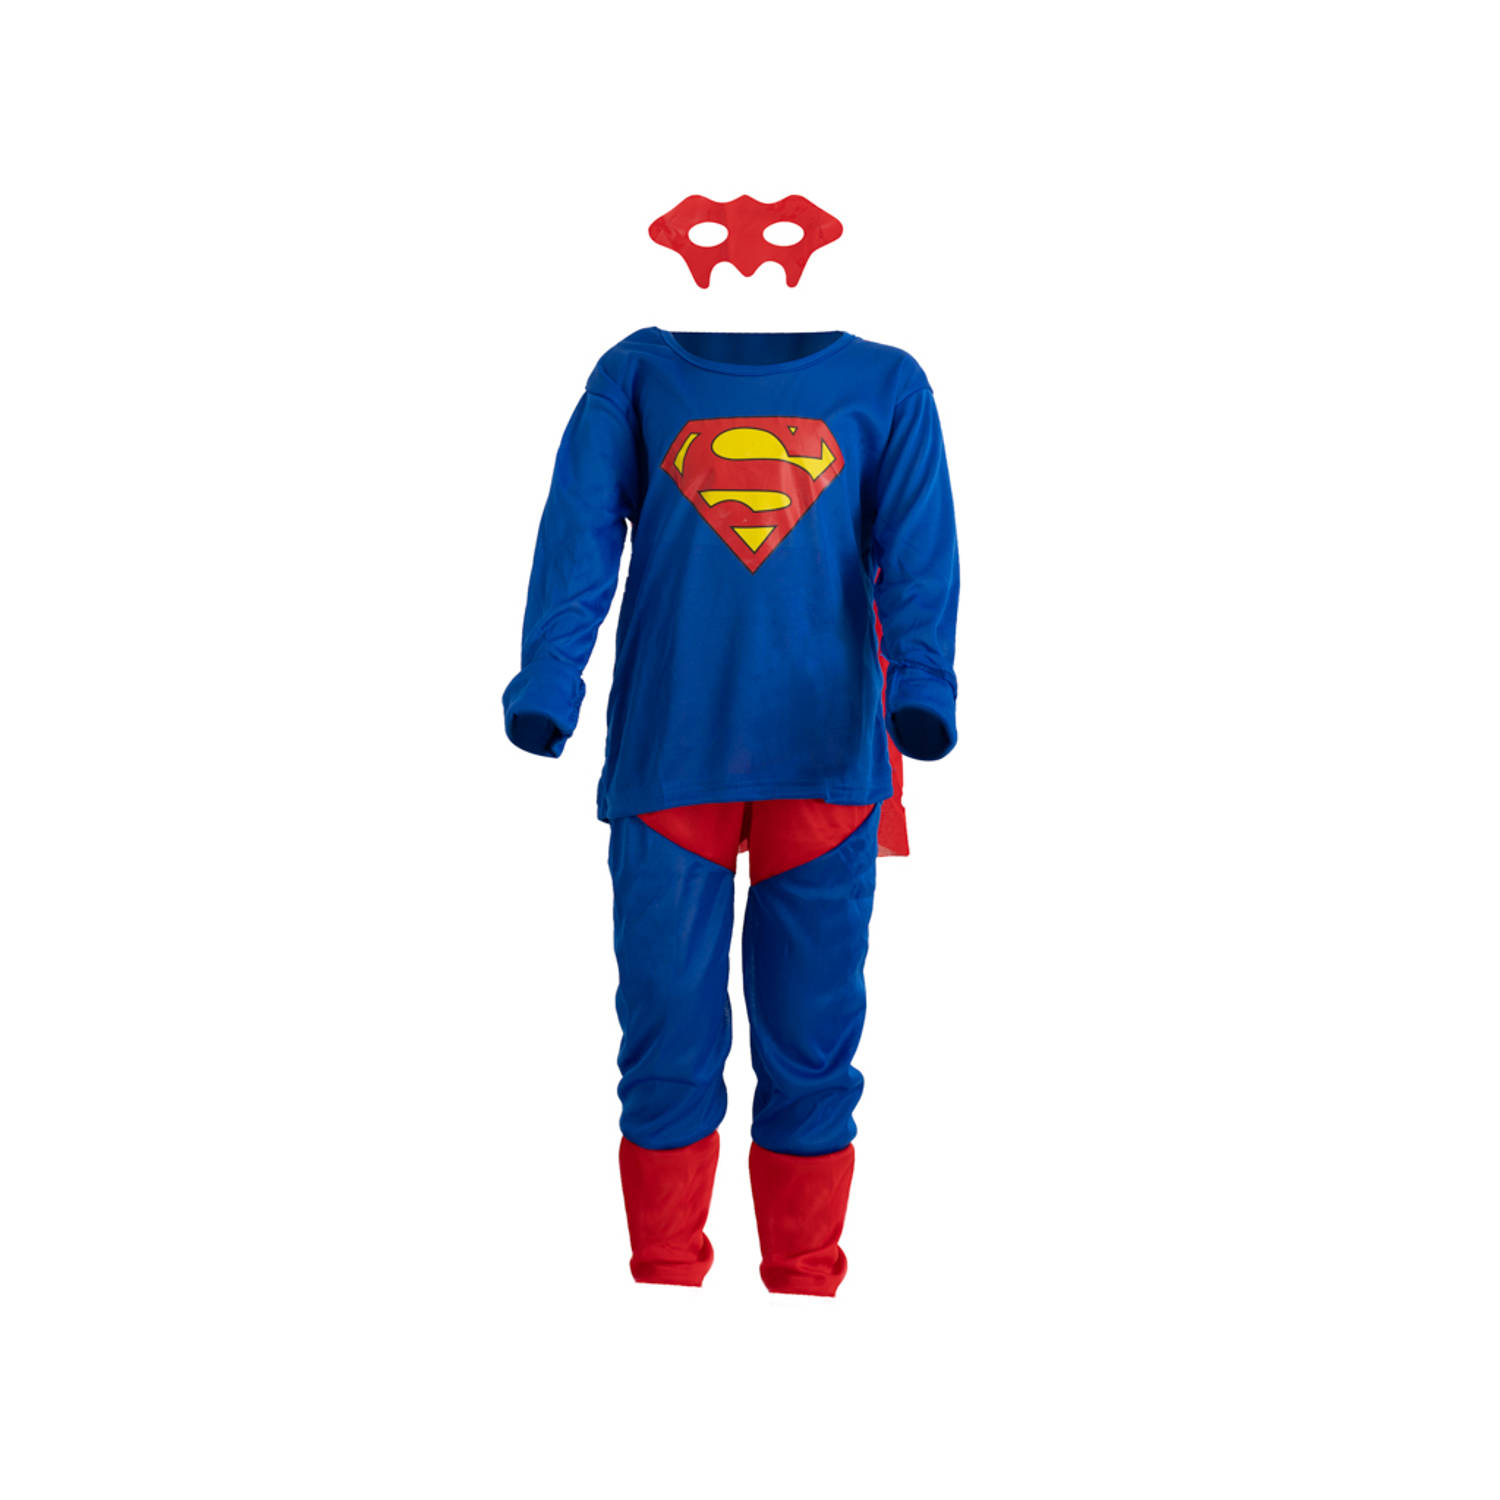 Actief Melancholie ontsmettingsmiddel Superman kostuum voor kinderen maat S 95 - 110cm - verkleedkleding -  carnavalskleding | Blokker